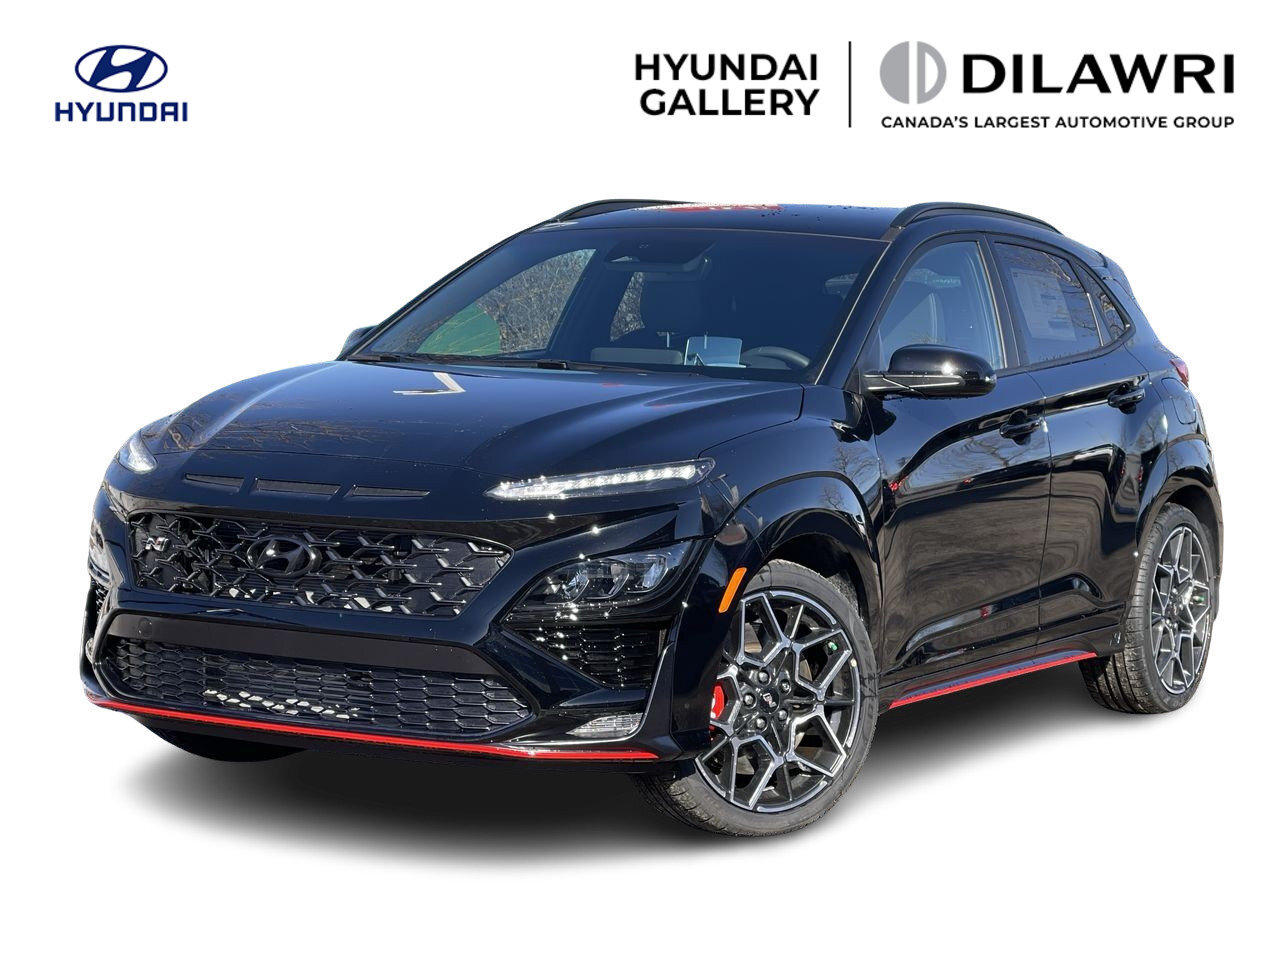 2023 Hyundai Kona N $6000 in Savings, Demo, Special, Model Clear Out